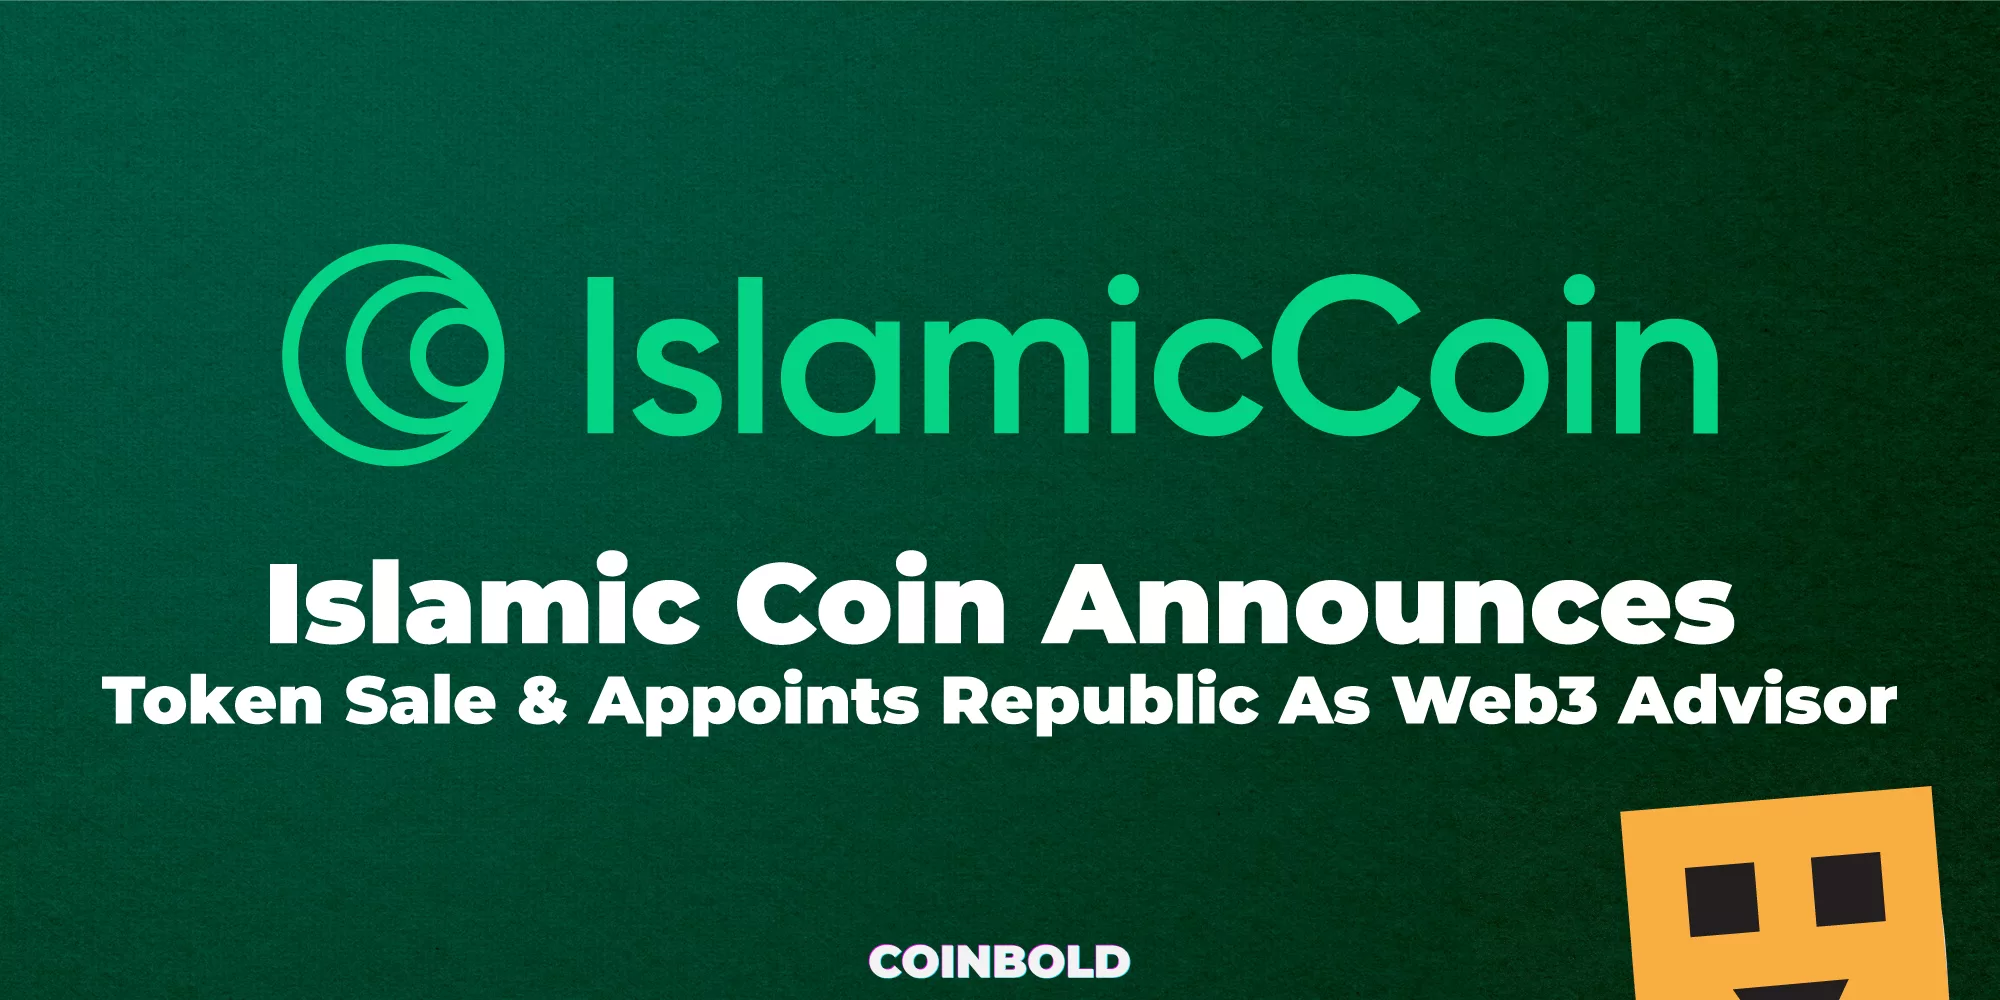 Islamic Coin Announces Token Sale & Appoints Republic As Web3 Advisor